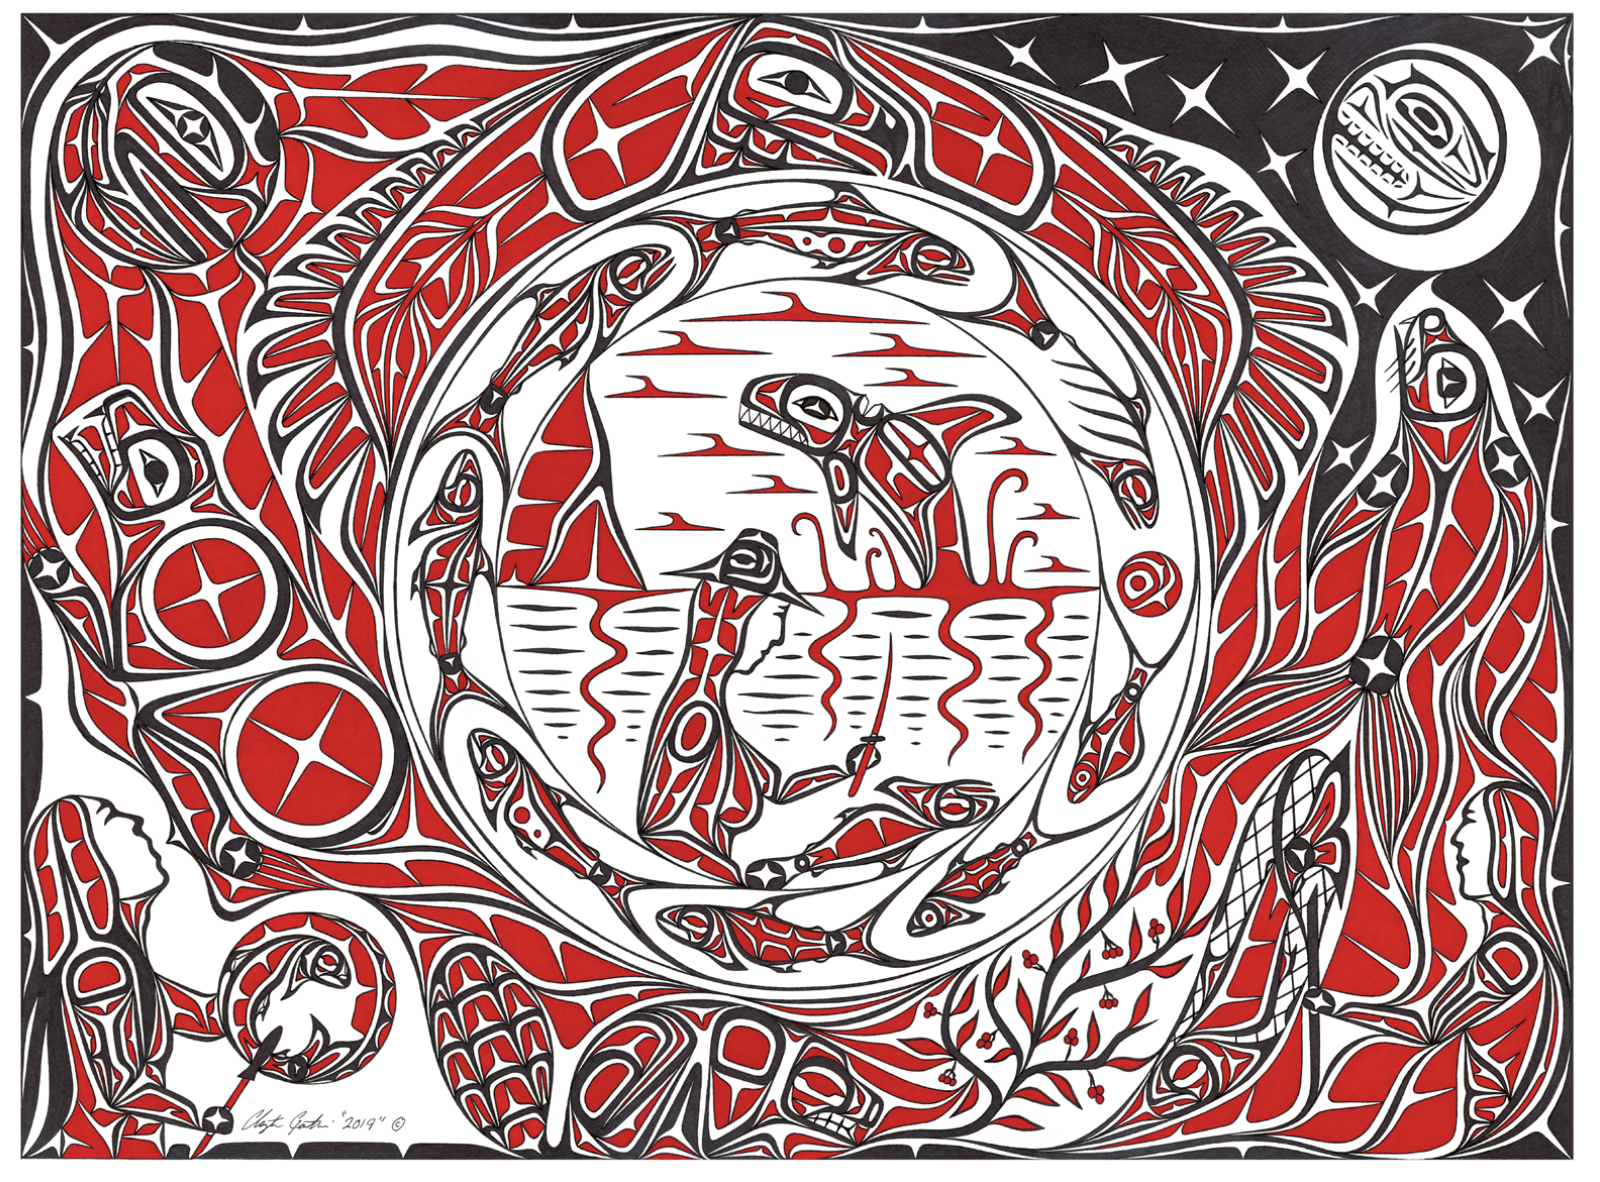 Gauthier Sacred Salmon mural